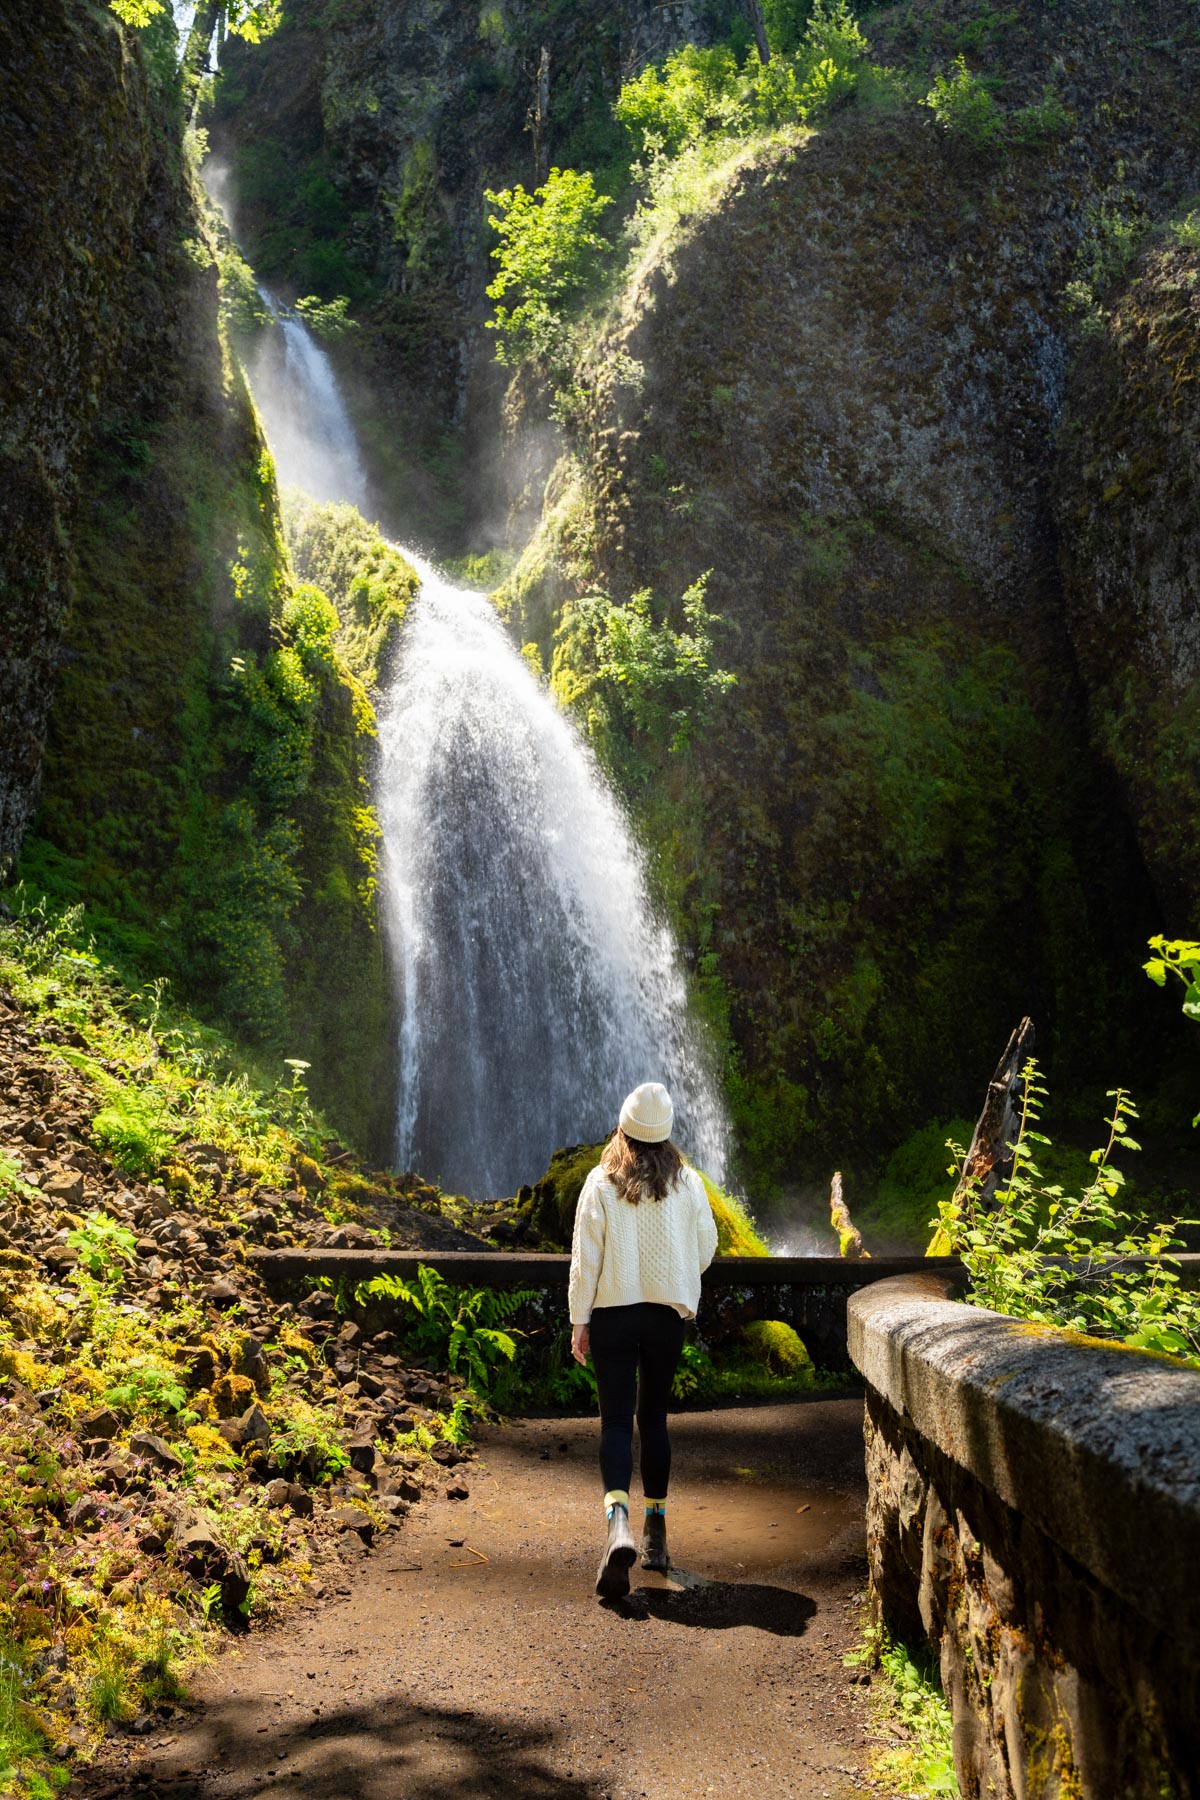 most beautiful places Oregon
Oregon and Washington recreation passes 